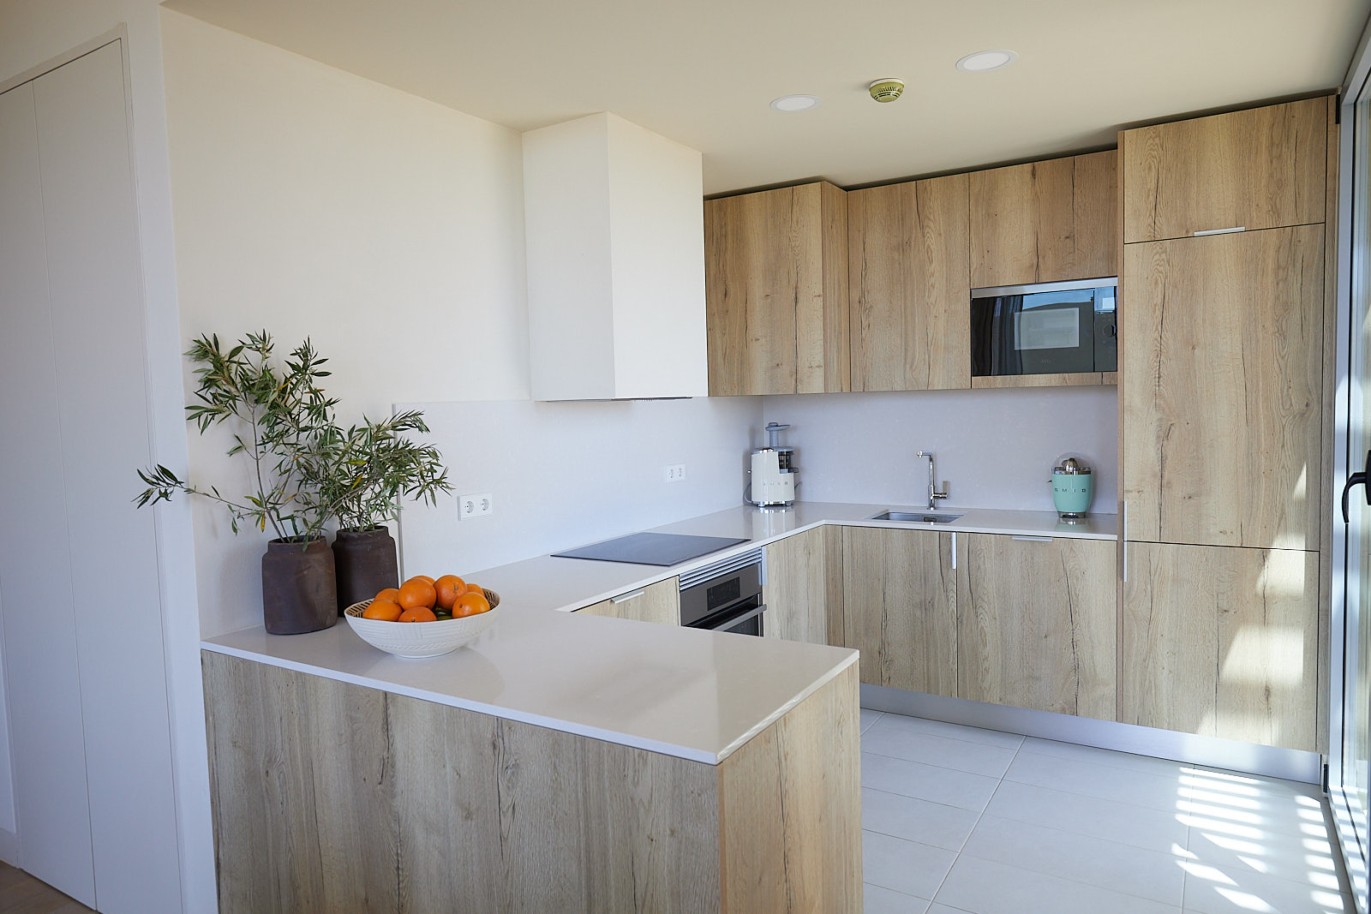 2 bedroom apartment in resort, for sale in Porches, Algarve_230577